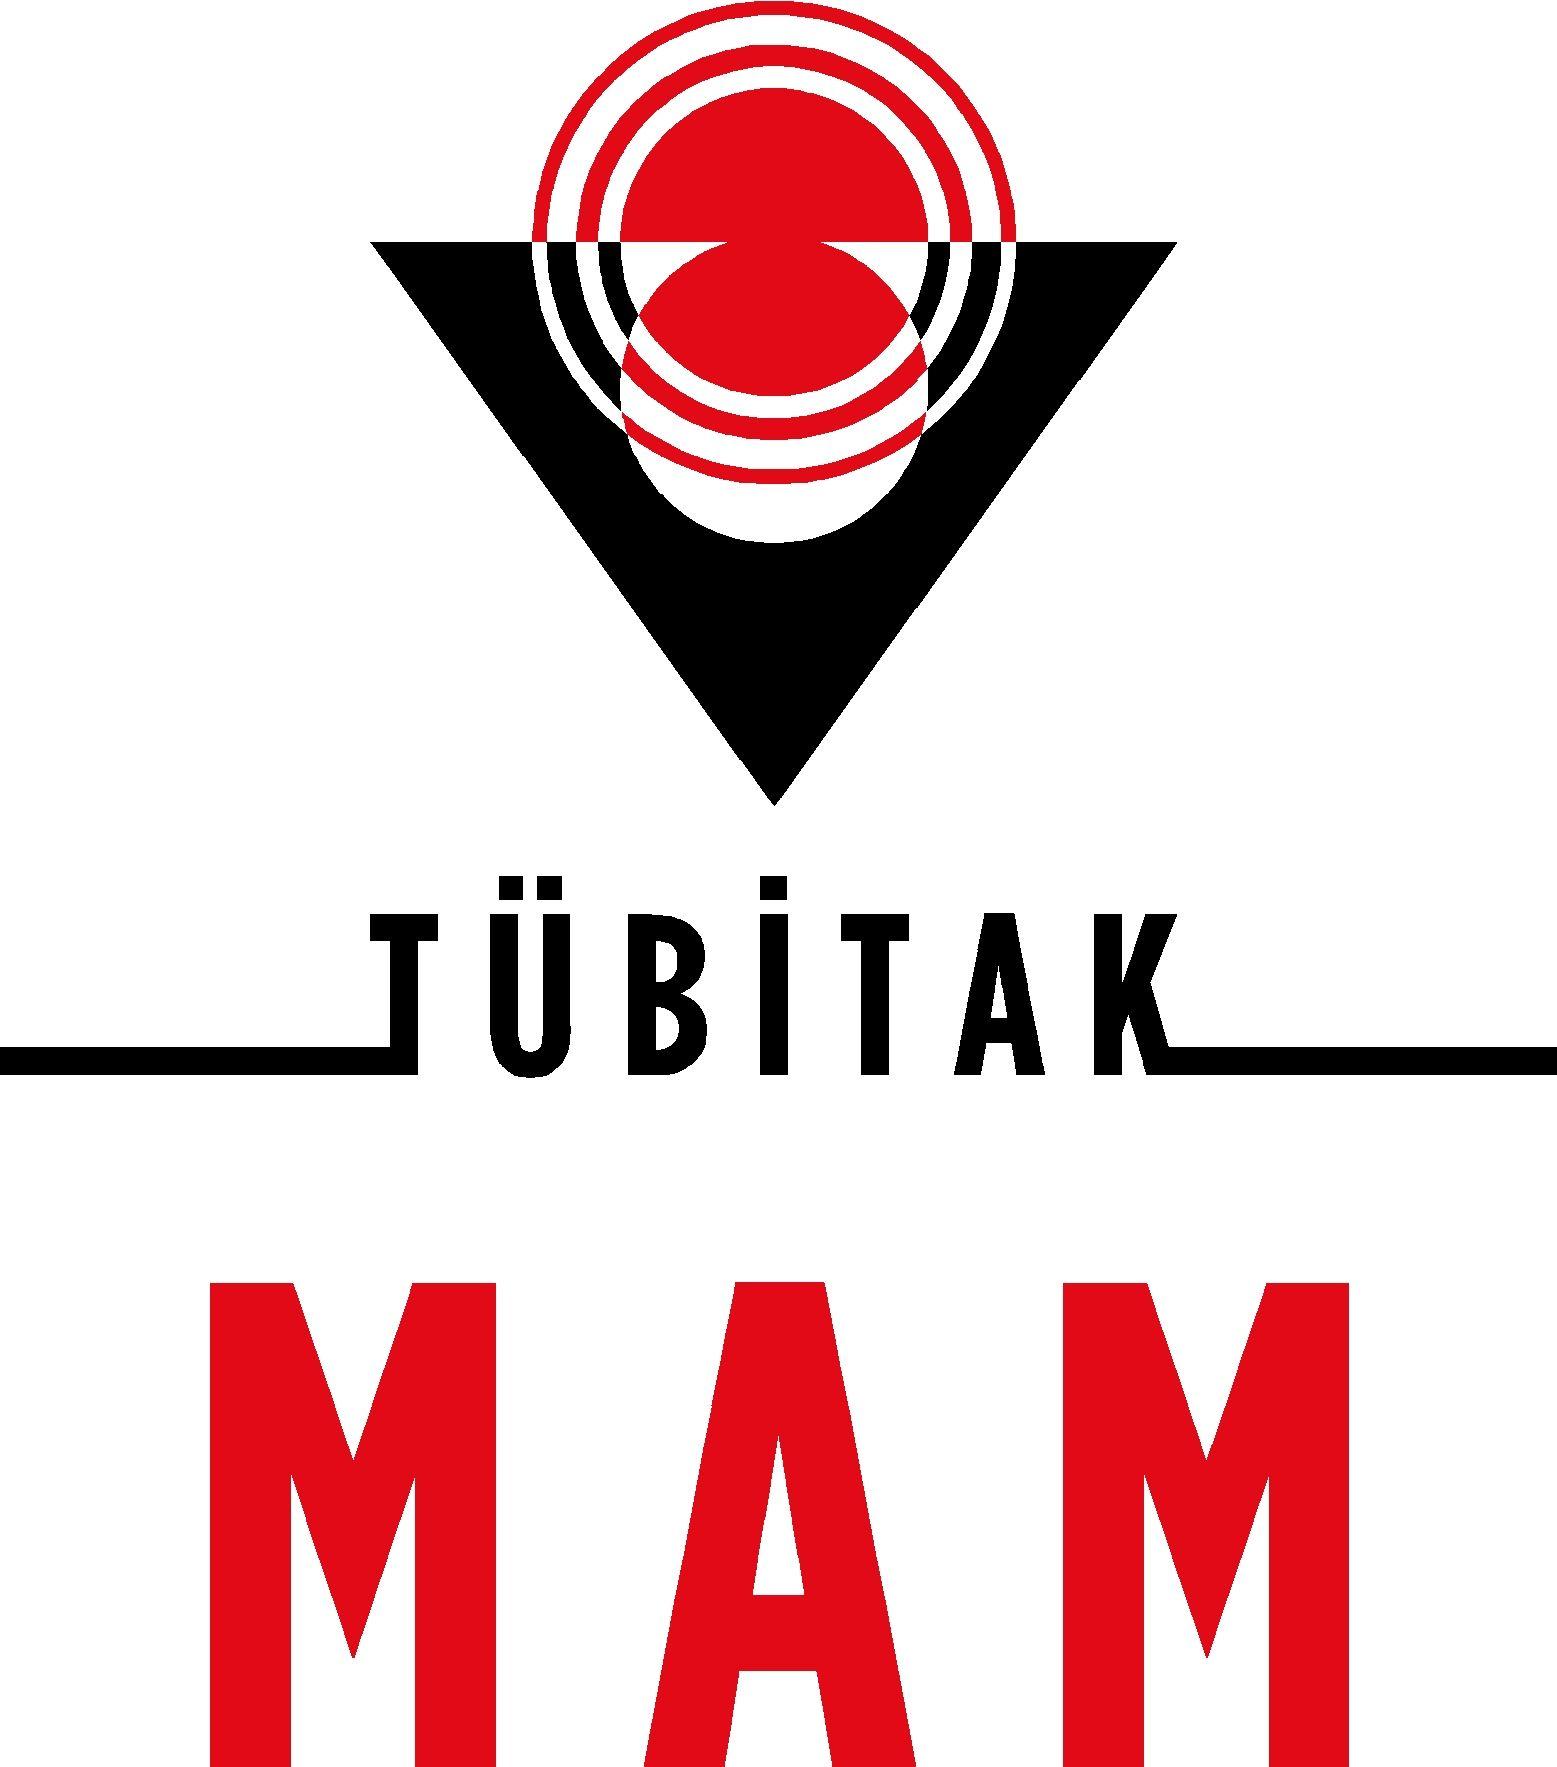 Mam Logo - Dosya:TUBITAK-MAM-Logo-JPG.jpg - Vikipedi